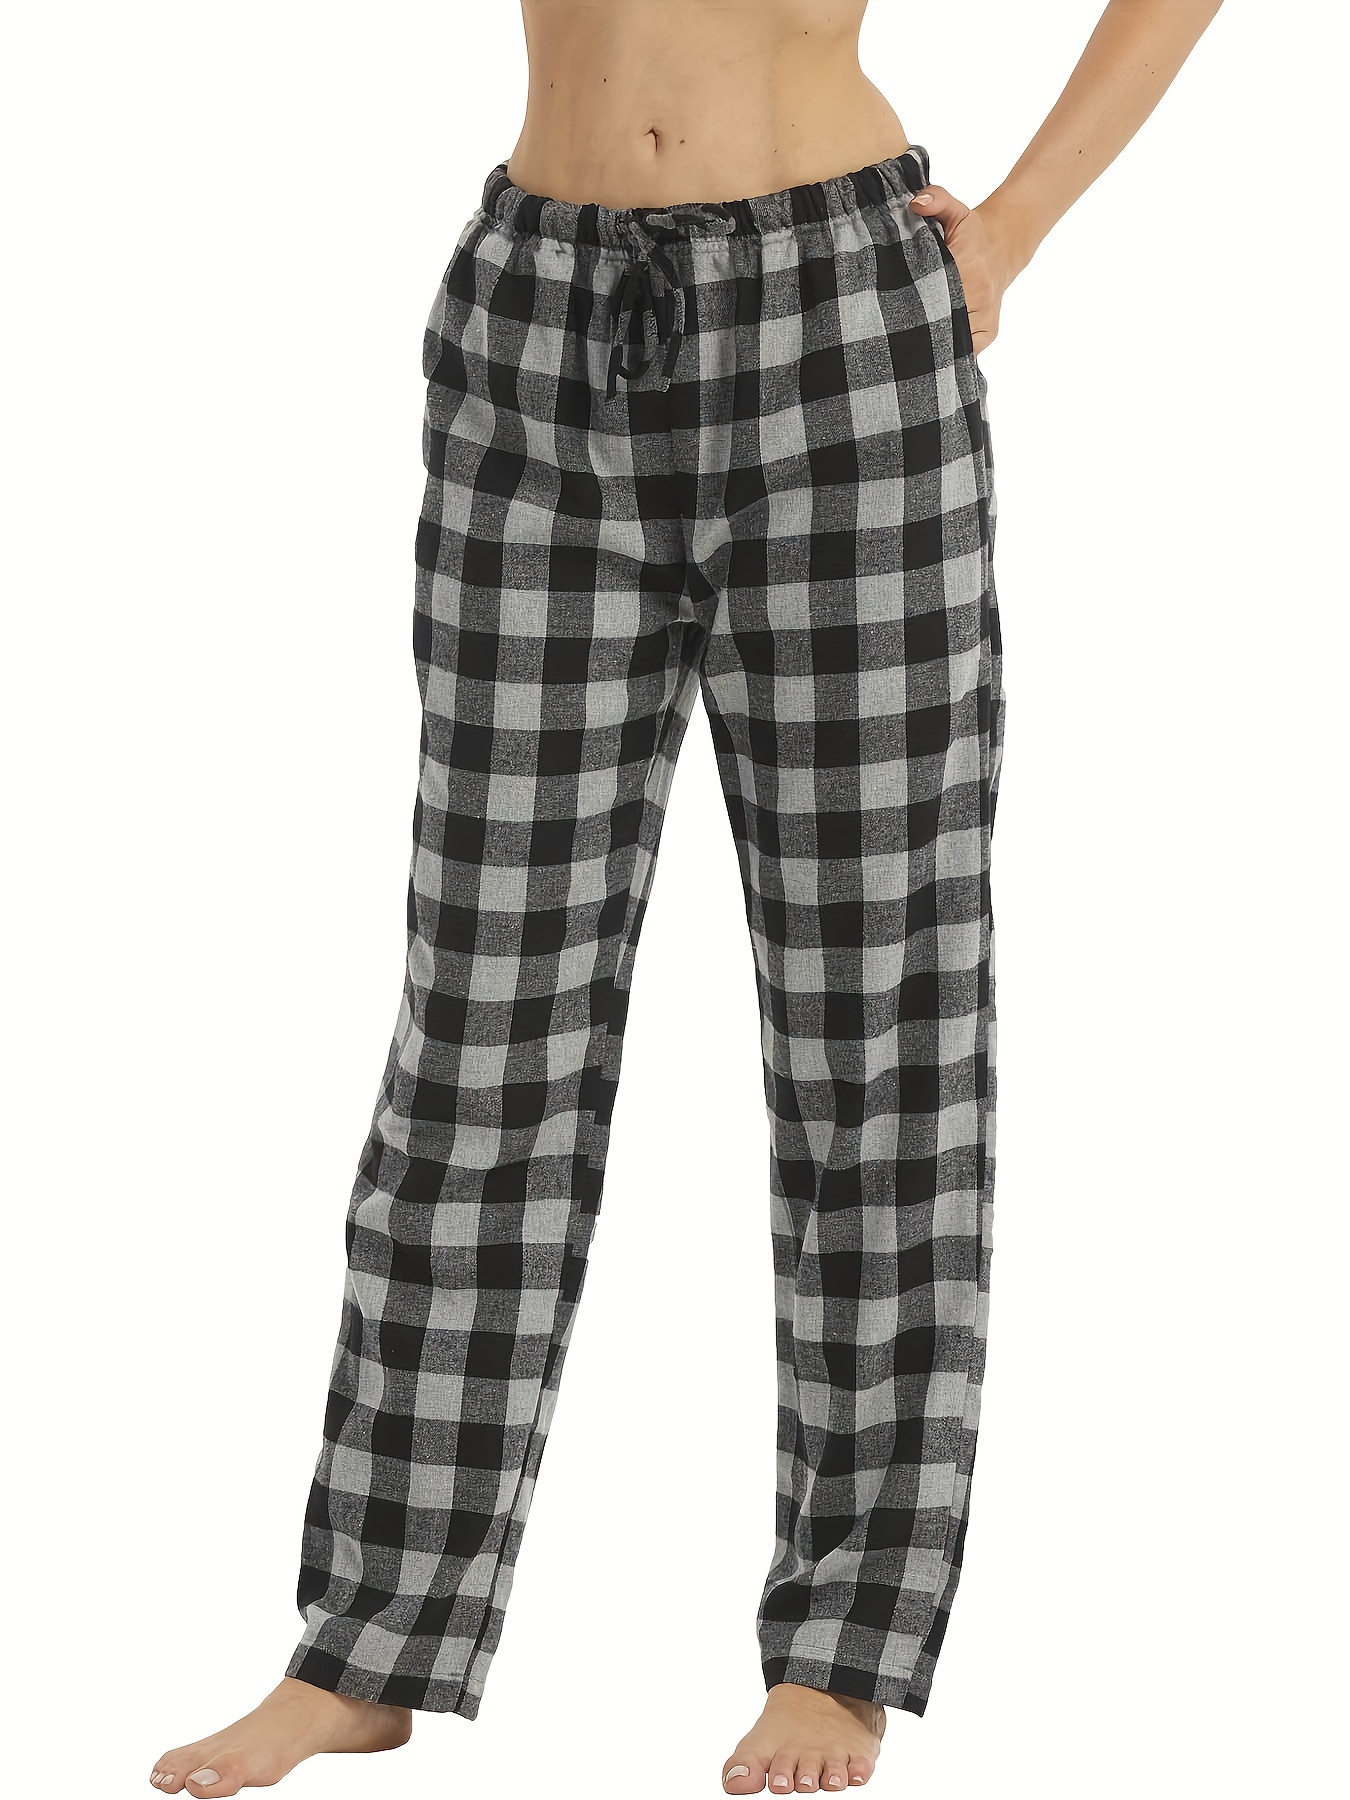 Women Plaid Pajama Pants Sleepwear, Women Lounge Pants Comfy